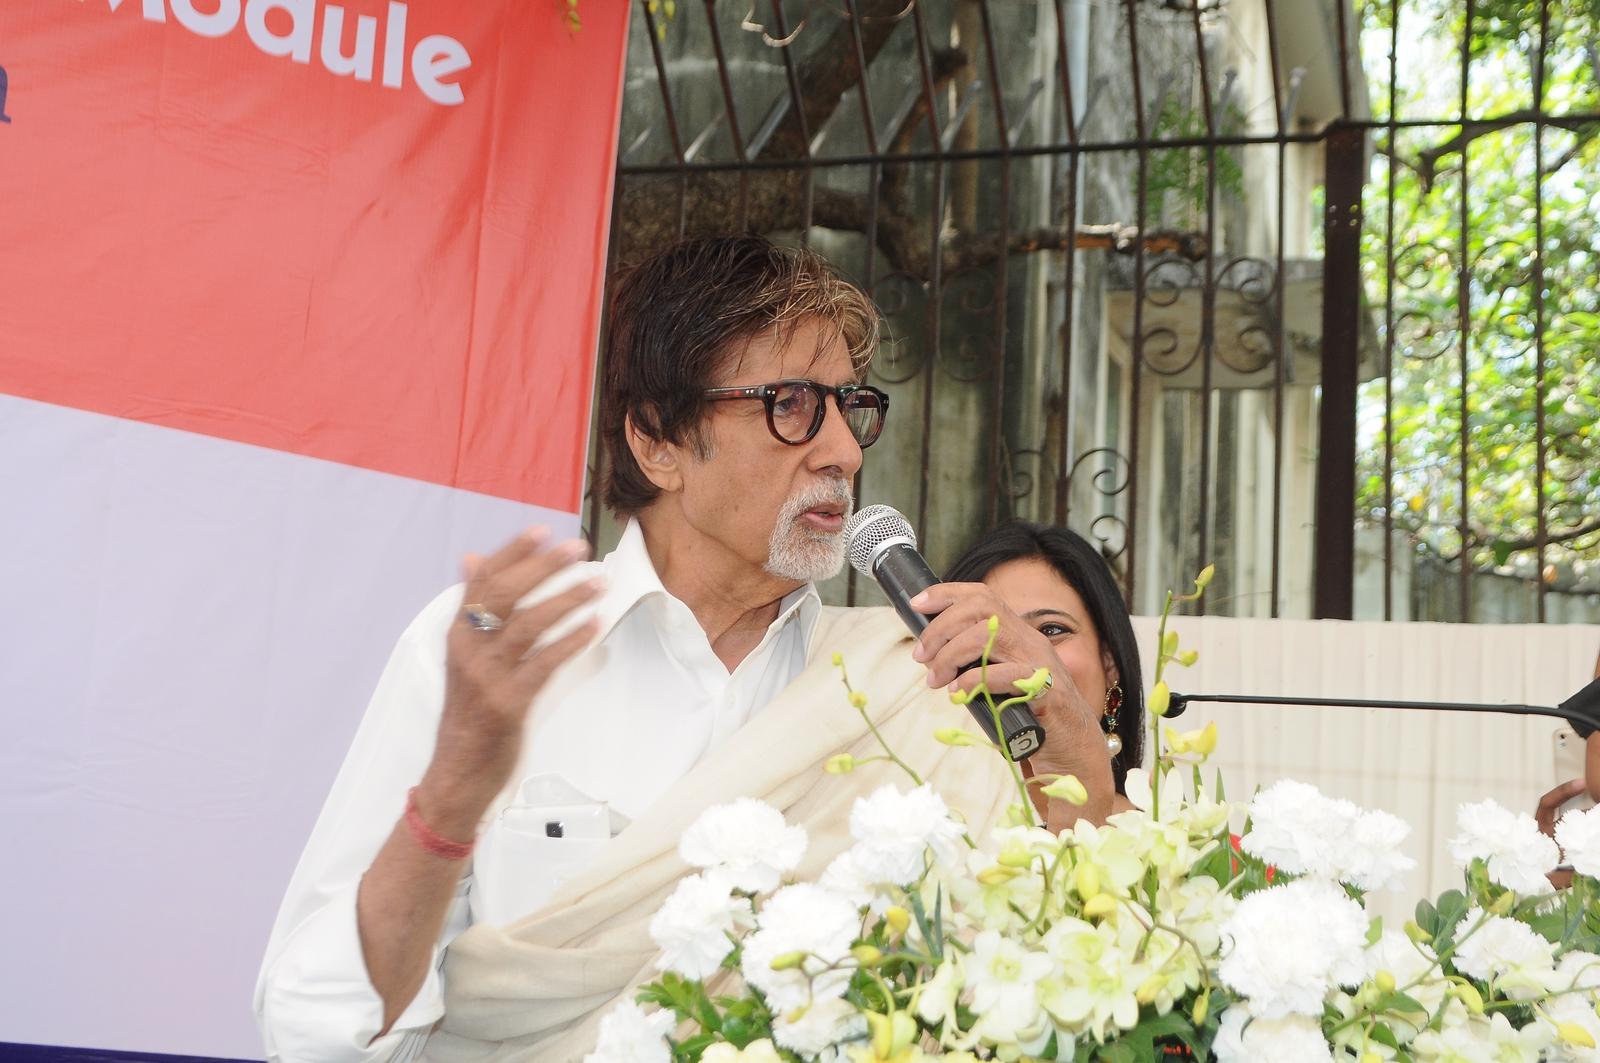 Amitabh Bachchan Launch Advanced Eye Care Technology